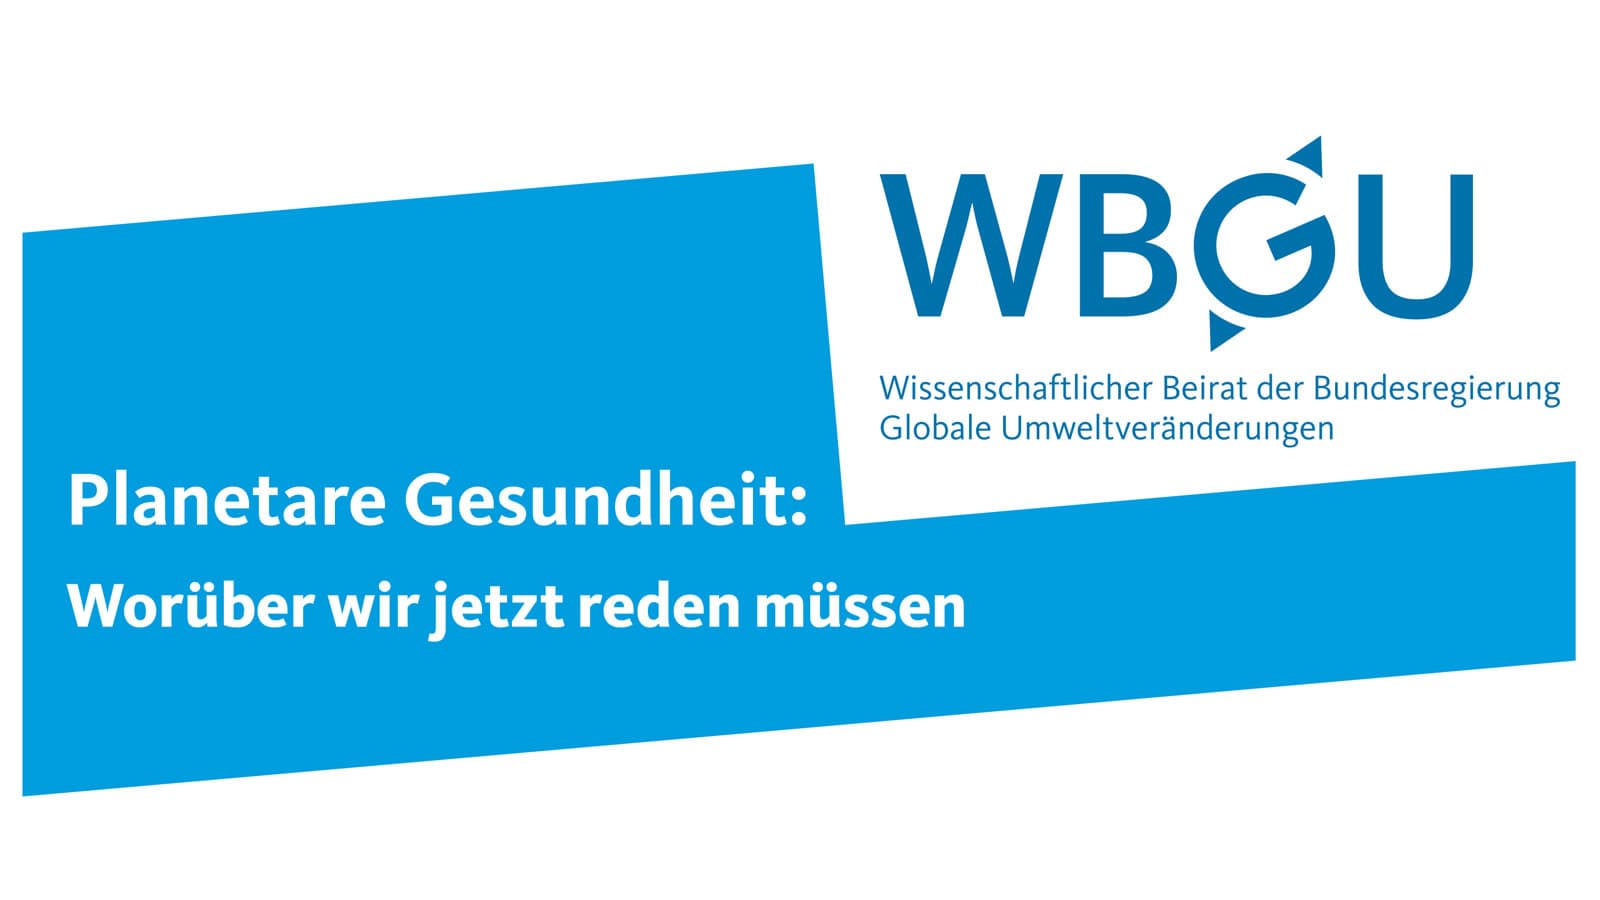 WBGU logo